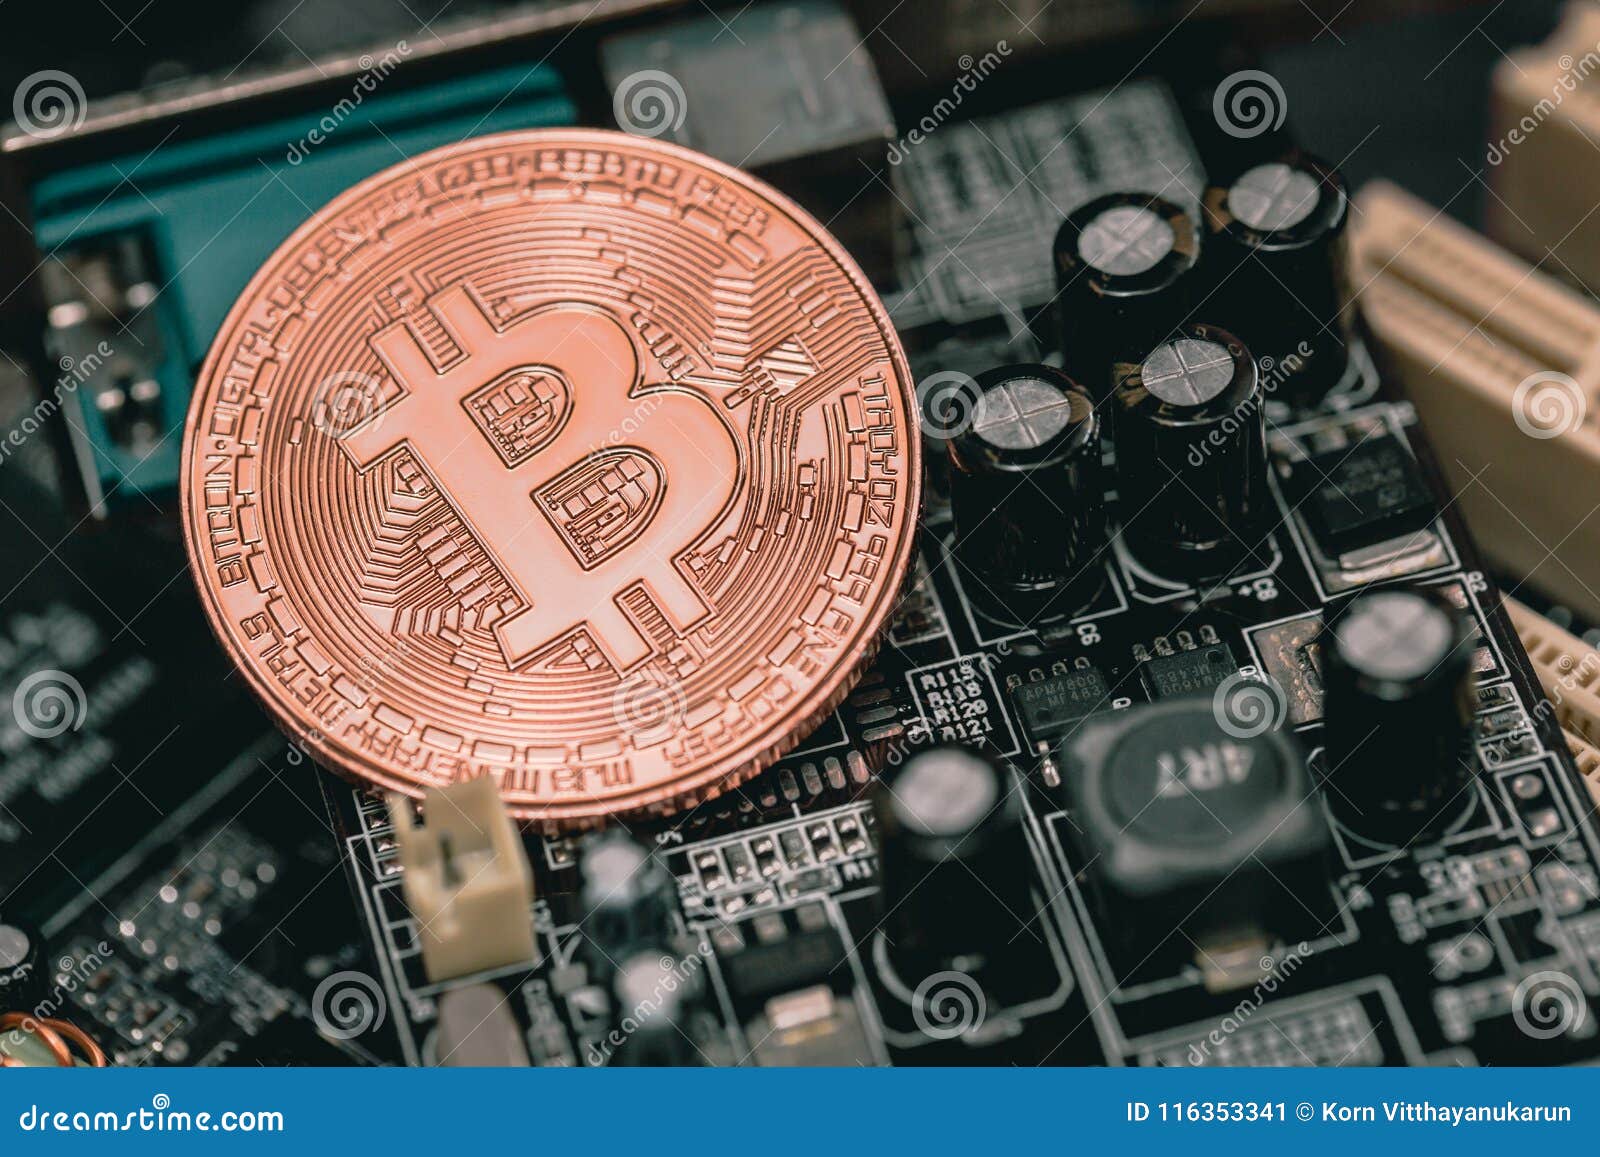 gold coin cpu mining bitcoins